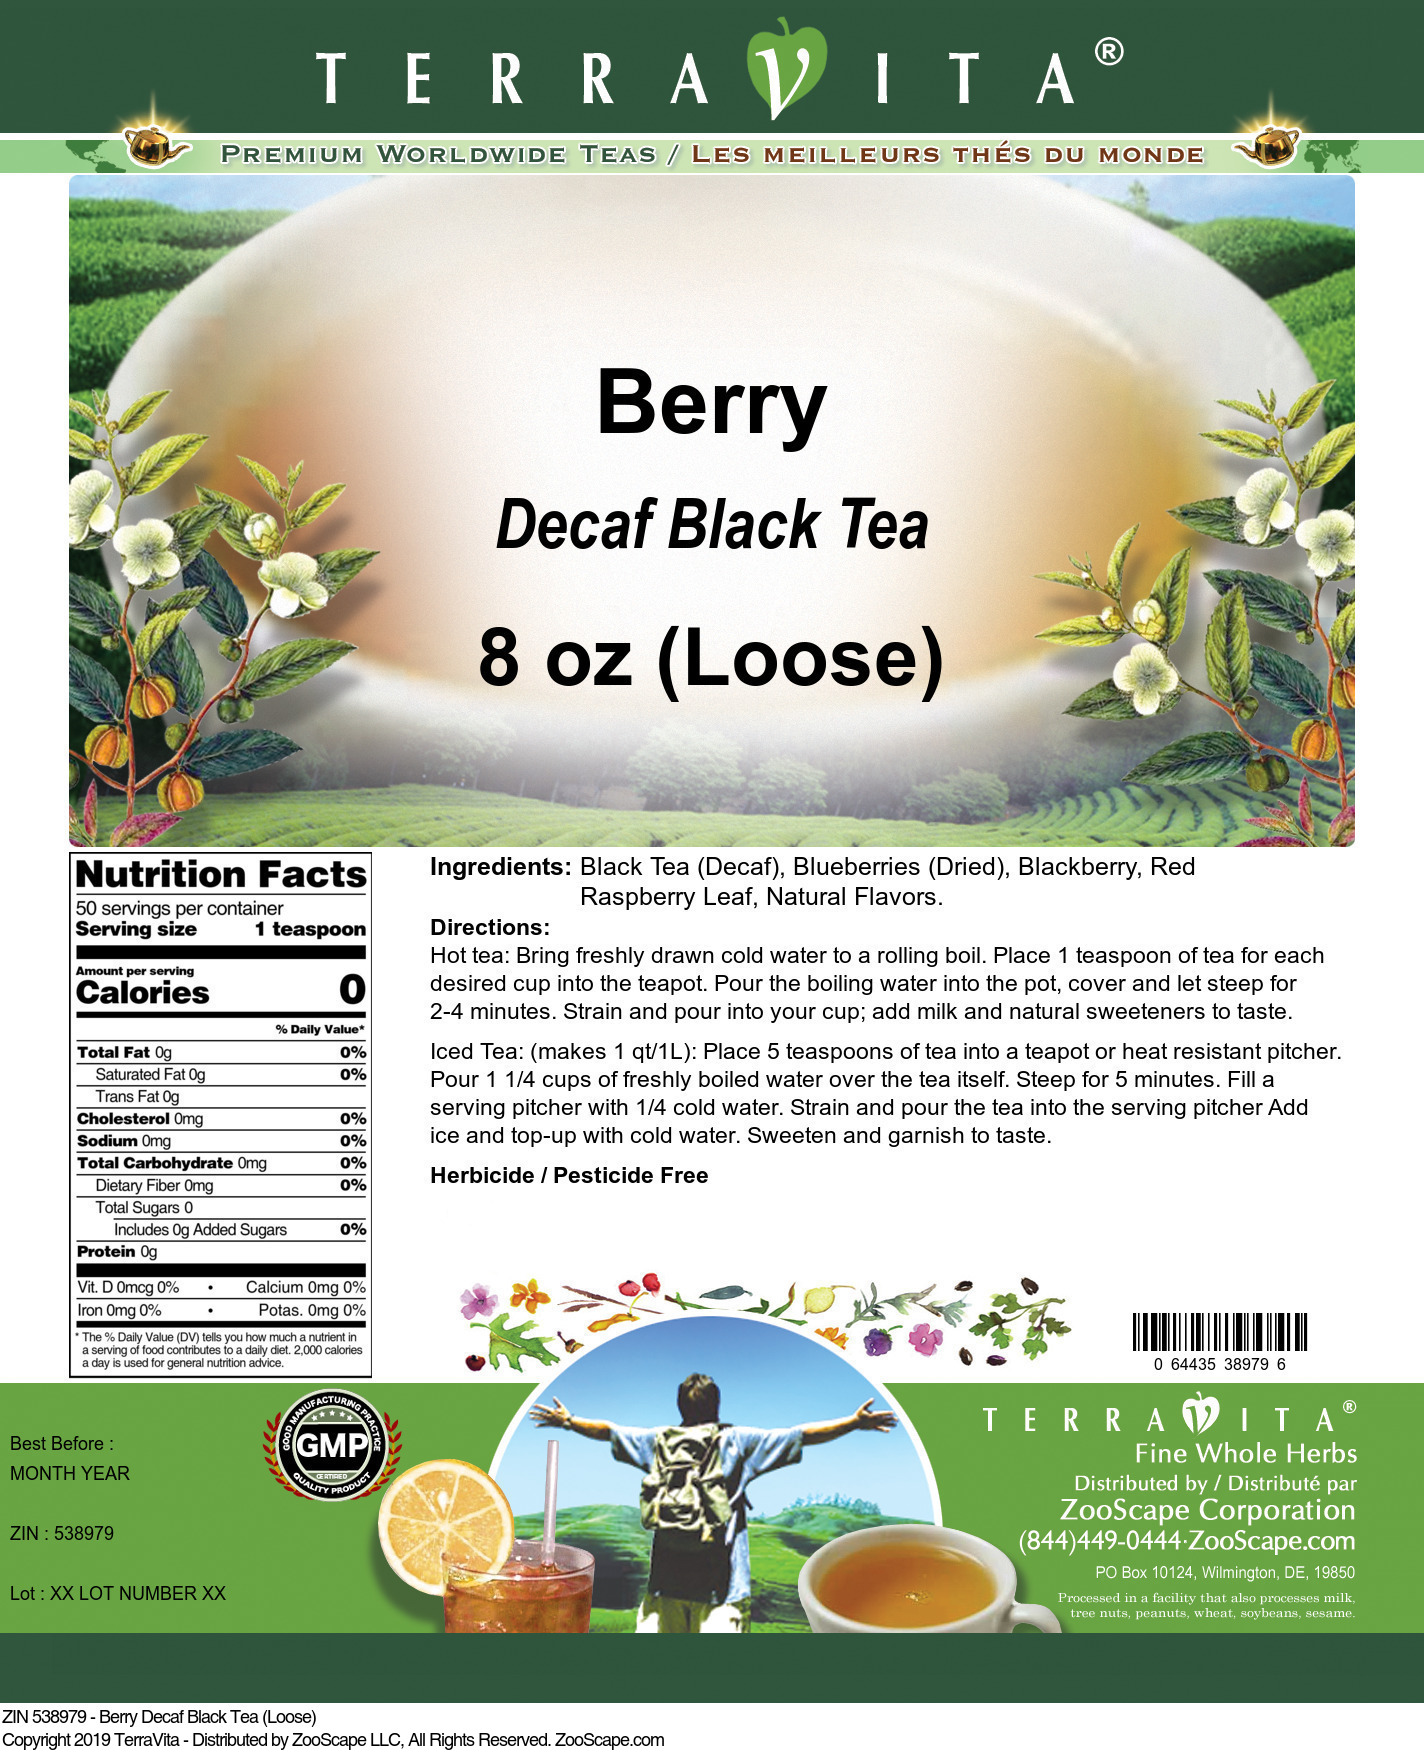 Berry Decaf Black Tea (Loose) - Label